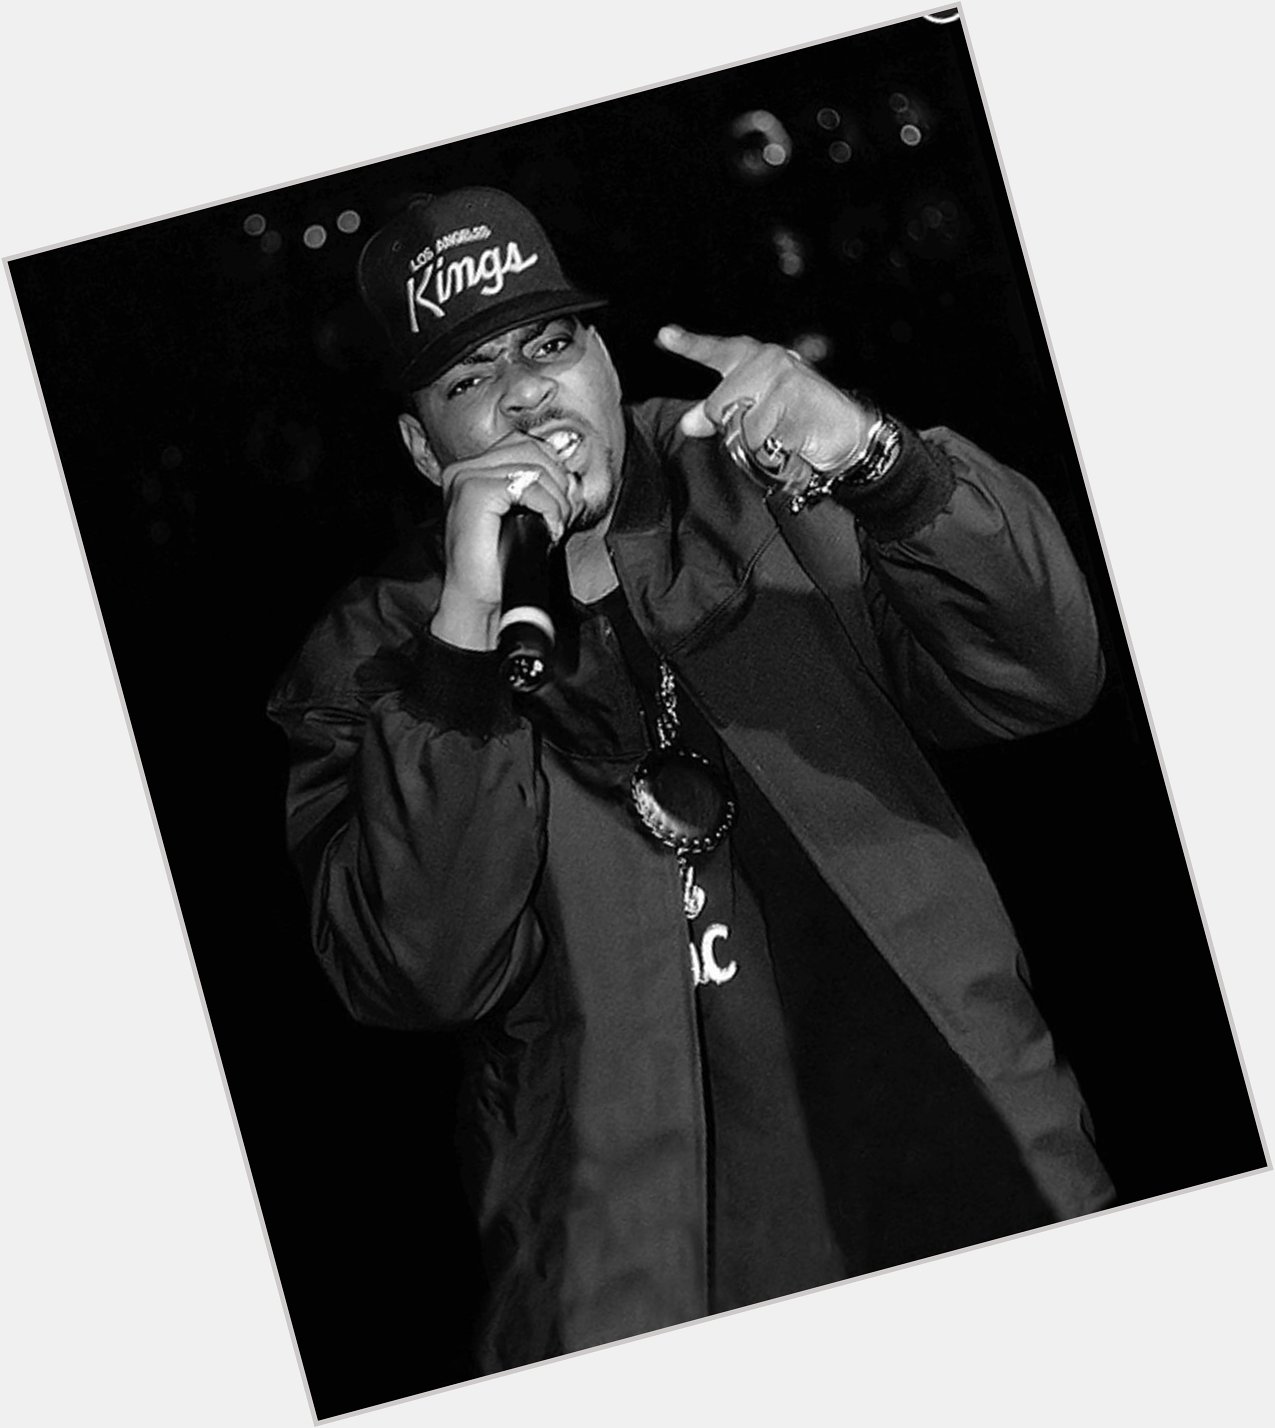 Happy birthday to hip hop legend, The D.O.C.! 53 